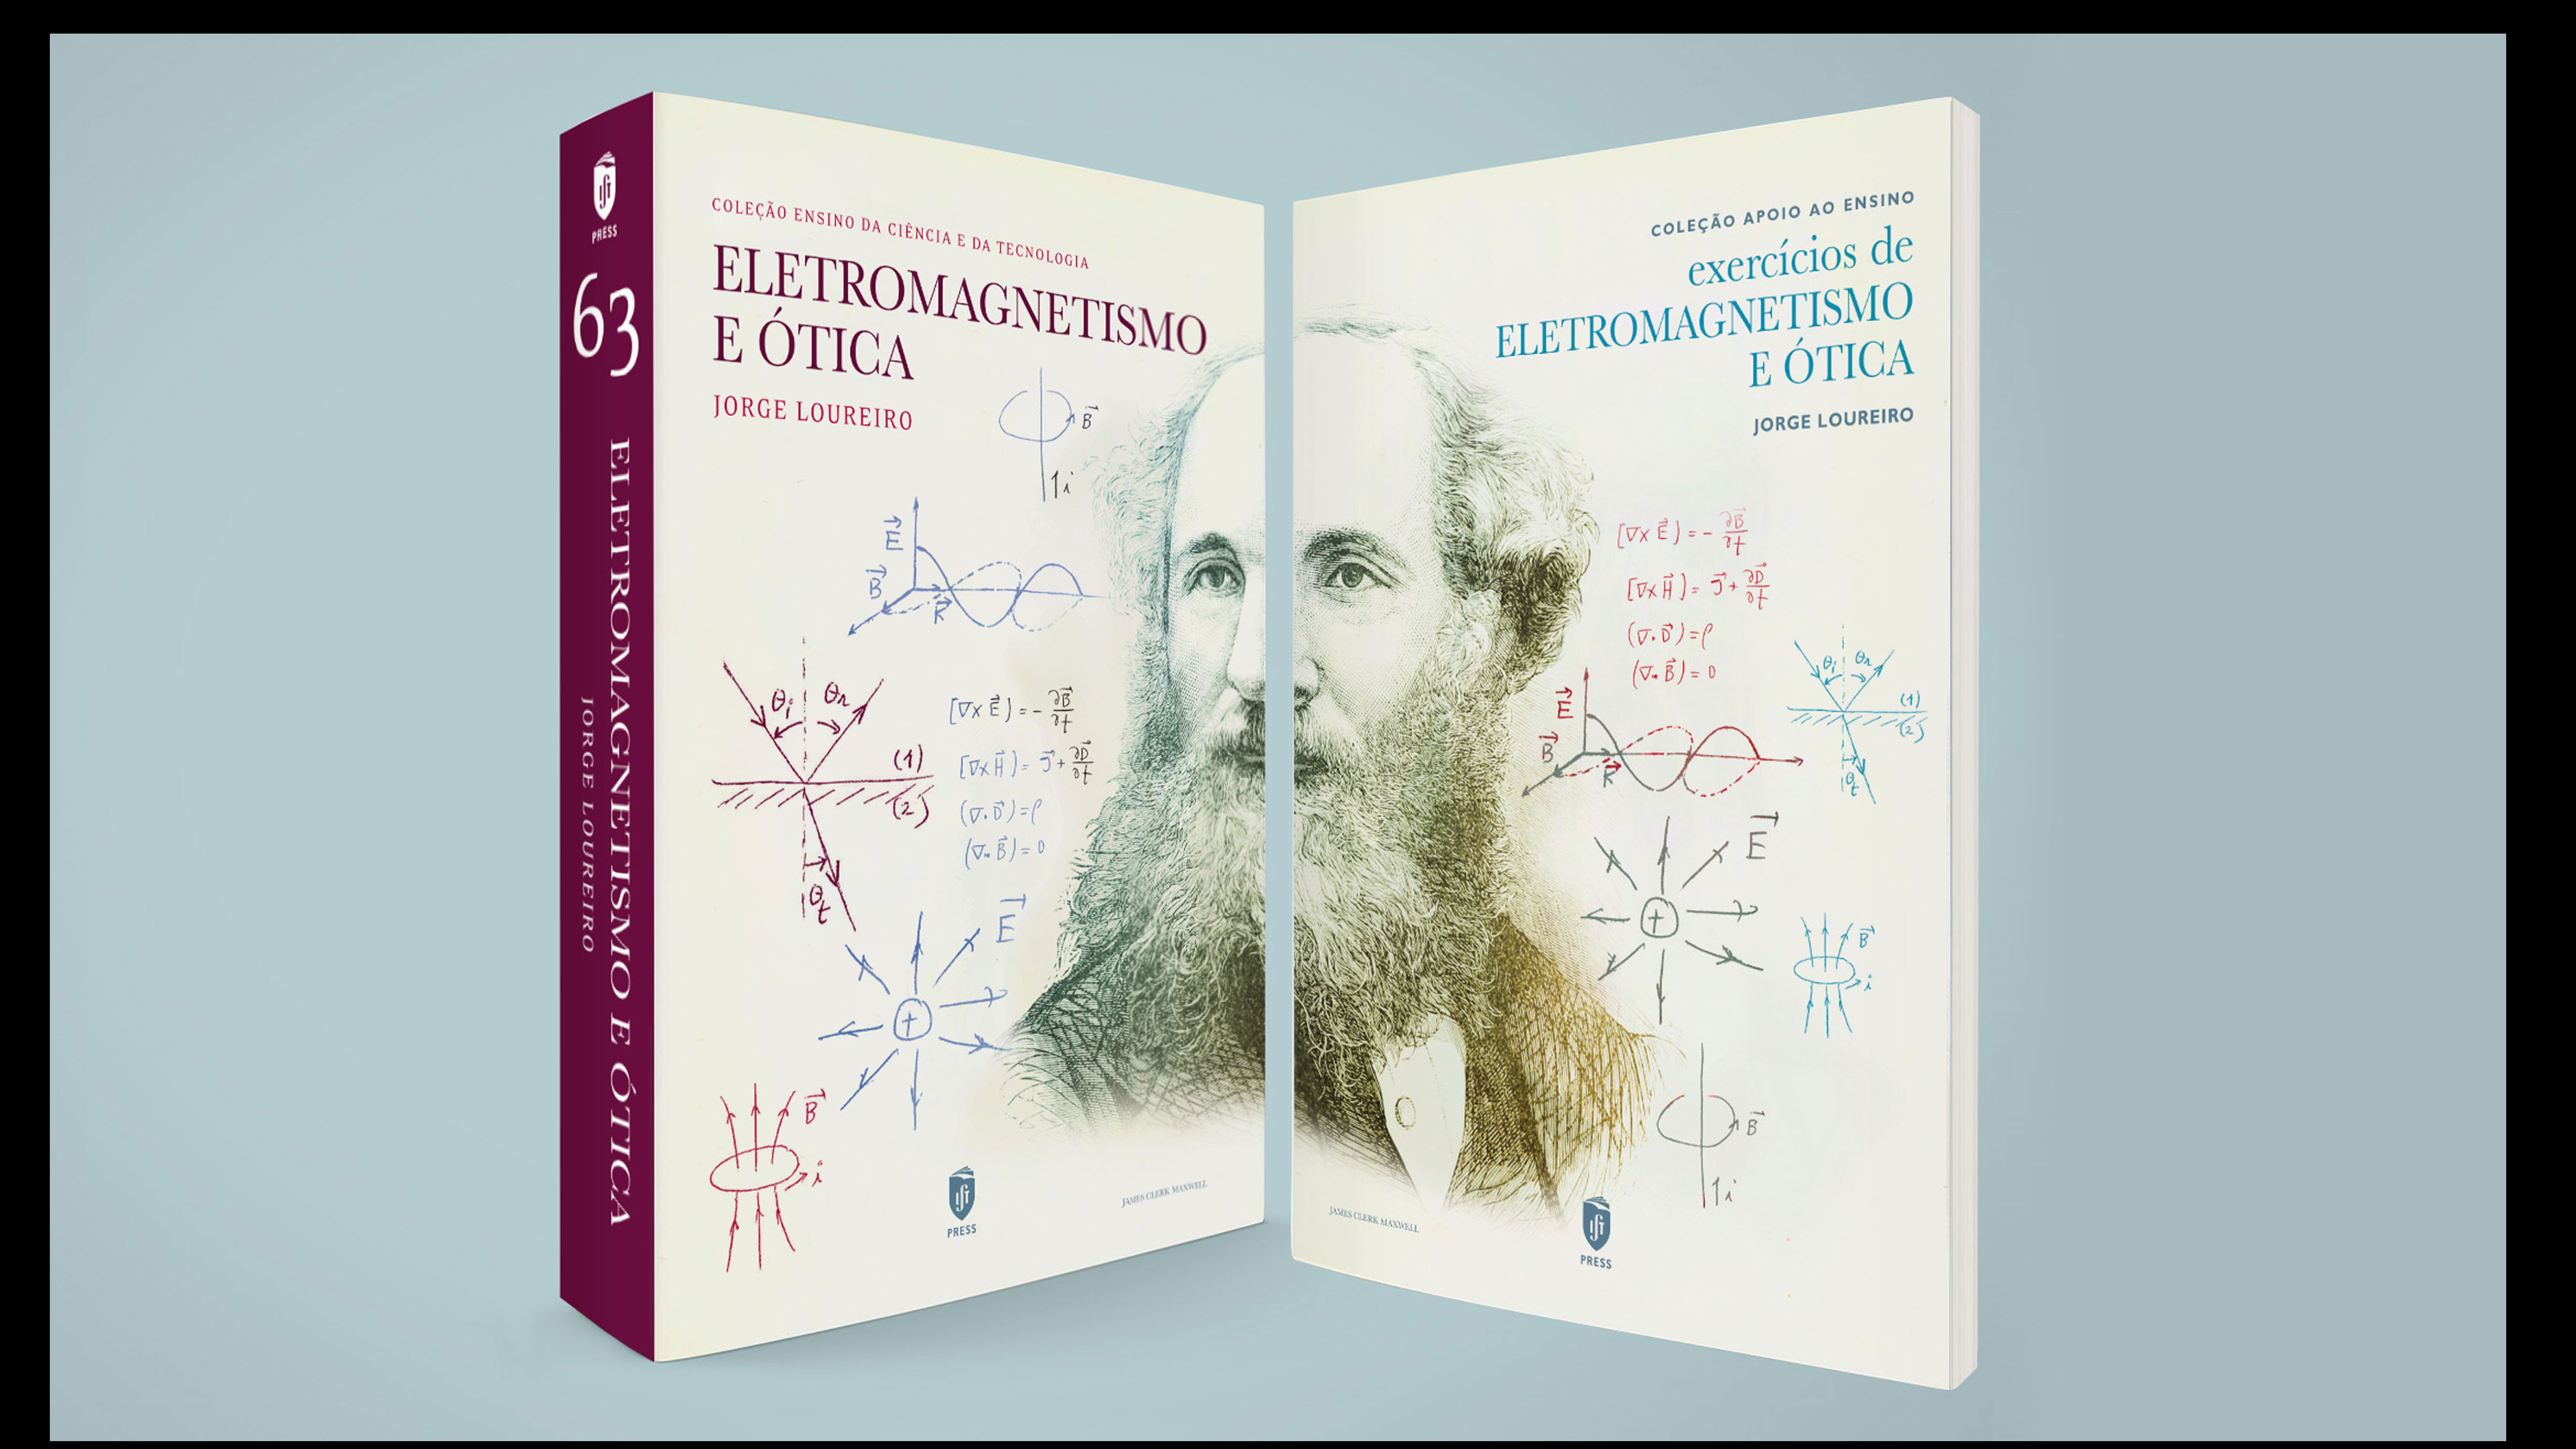 New books on Electromagnetism and Optics by Jorge Loureiro